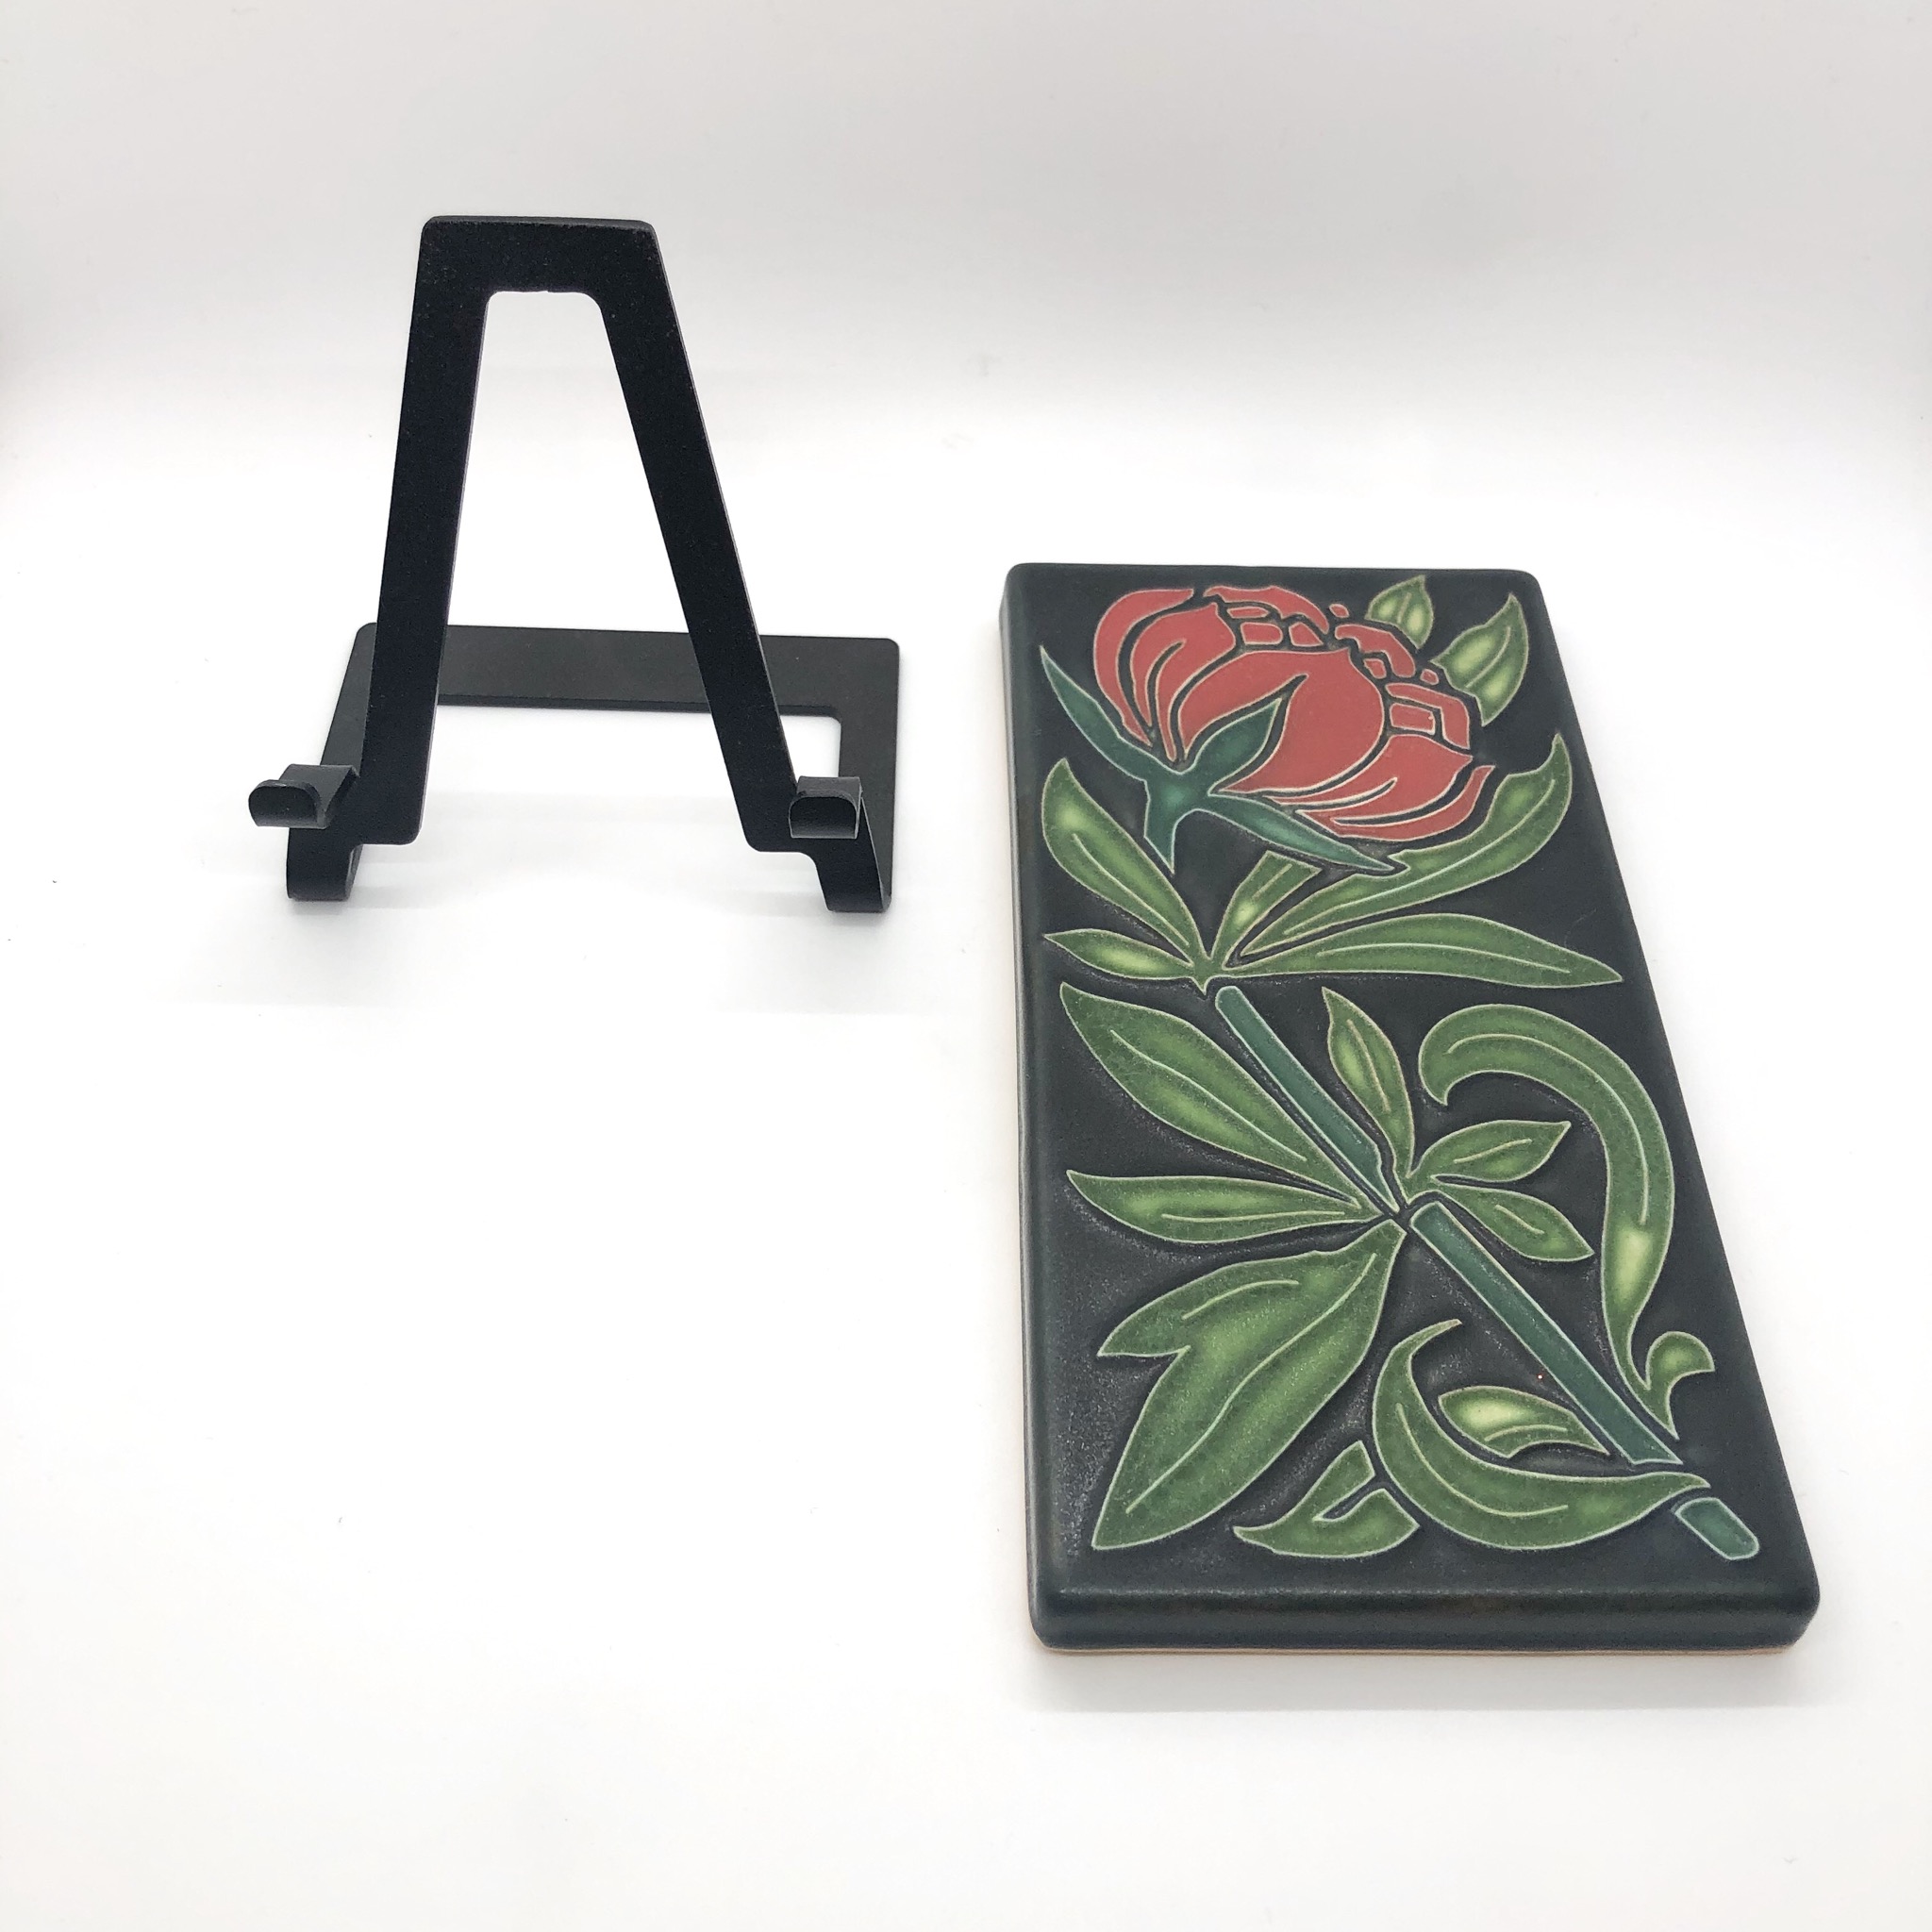 Motawi Tileworks Poppy Flower Tile on Easel | Clouds Gallery